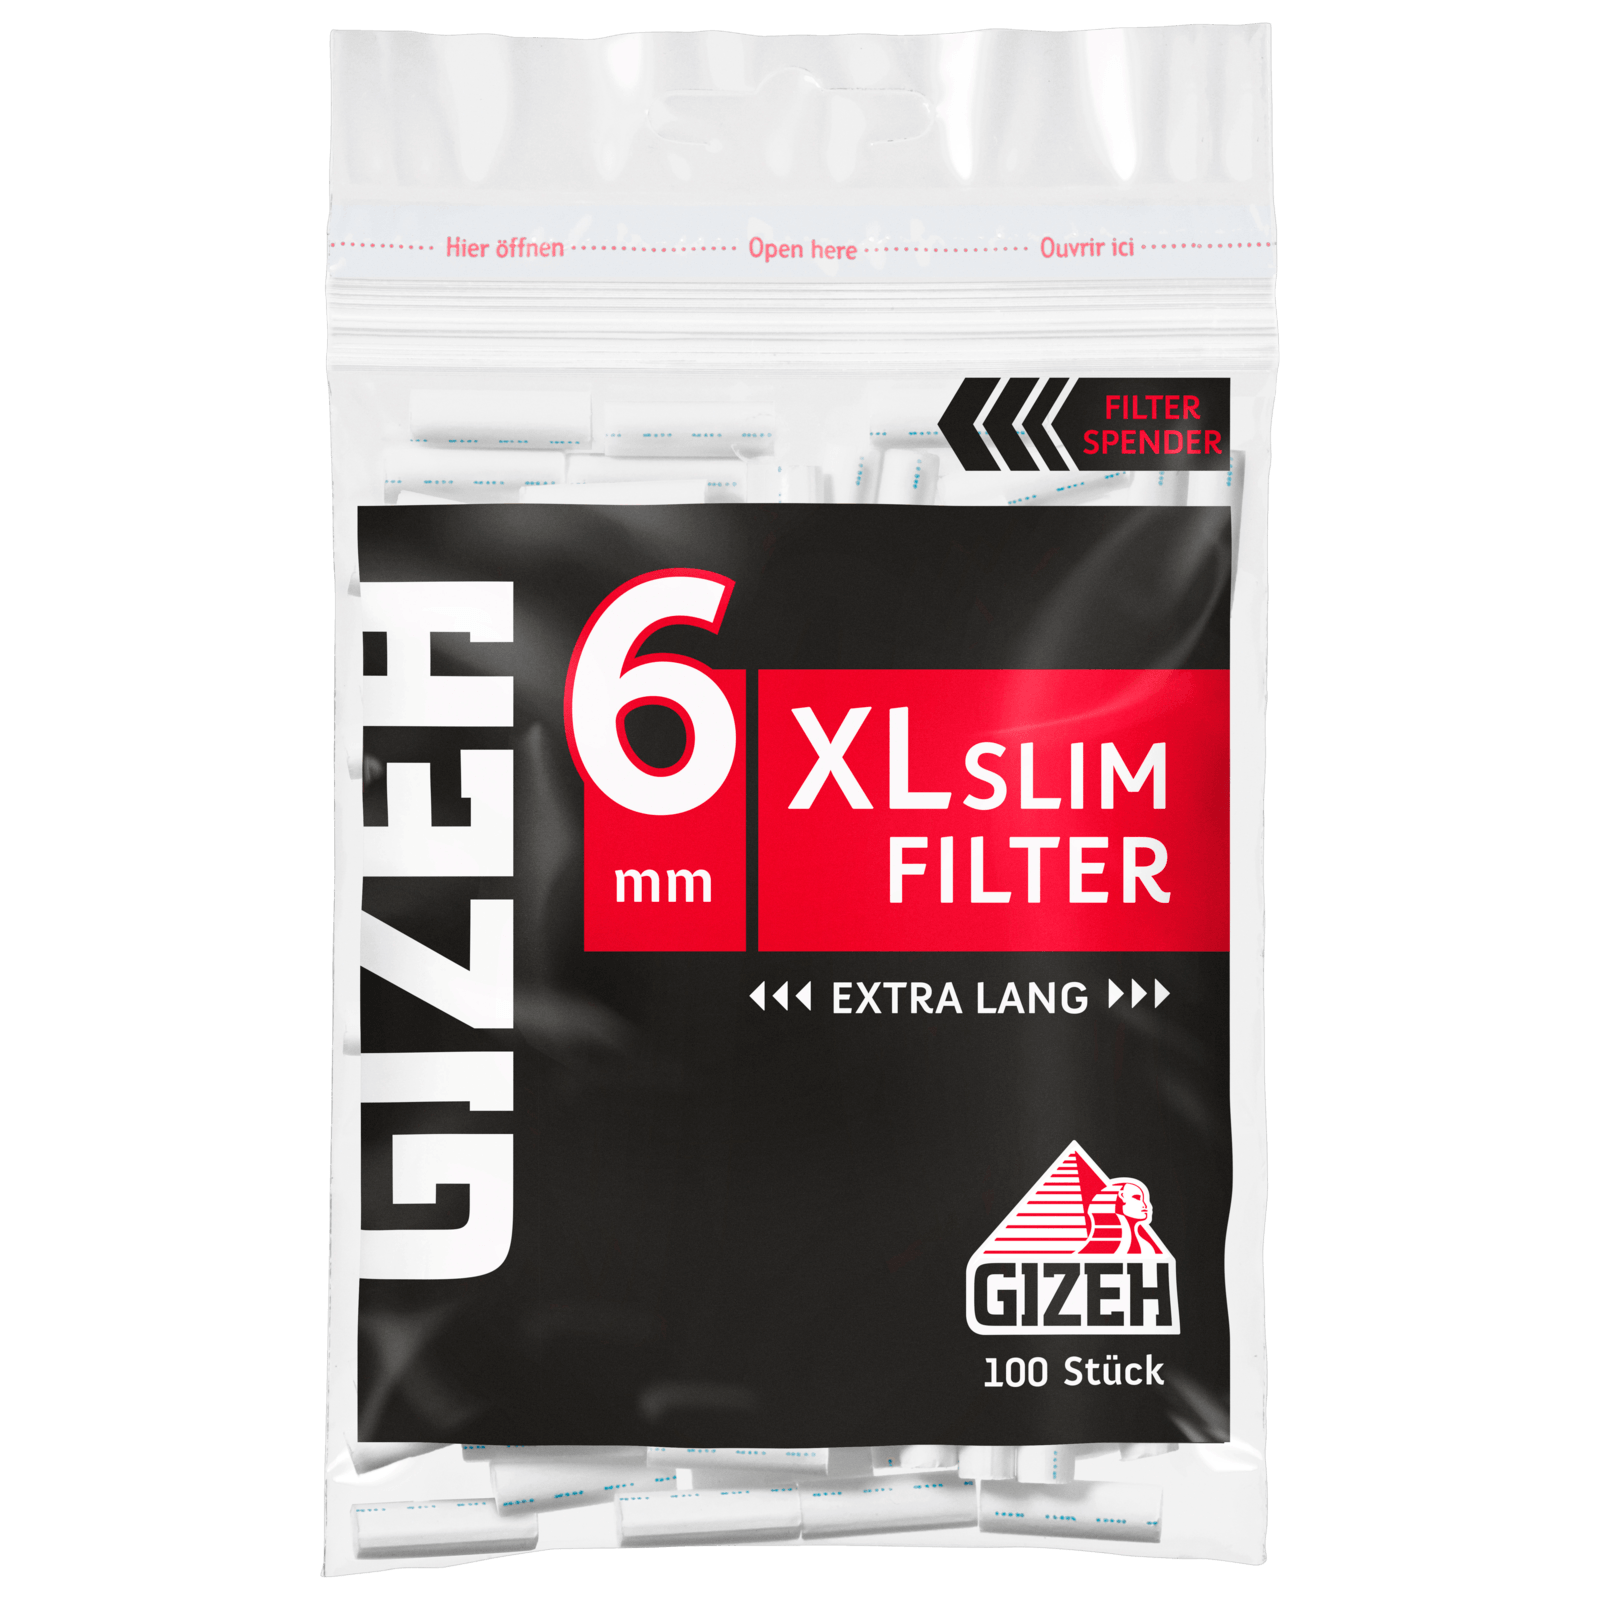 Gizeh XL Slim Filter 100 Stück bei REWE online bestellen!